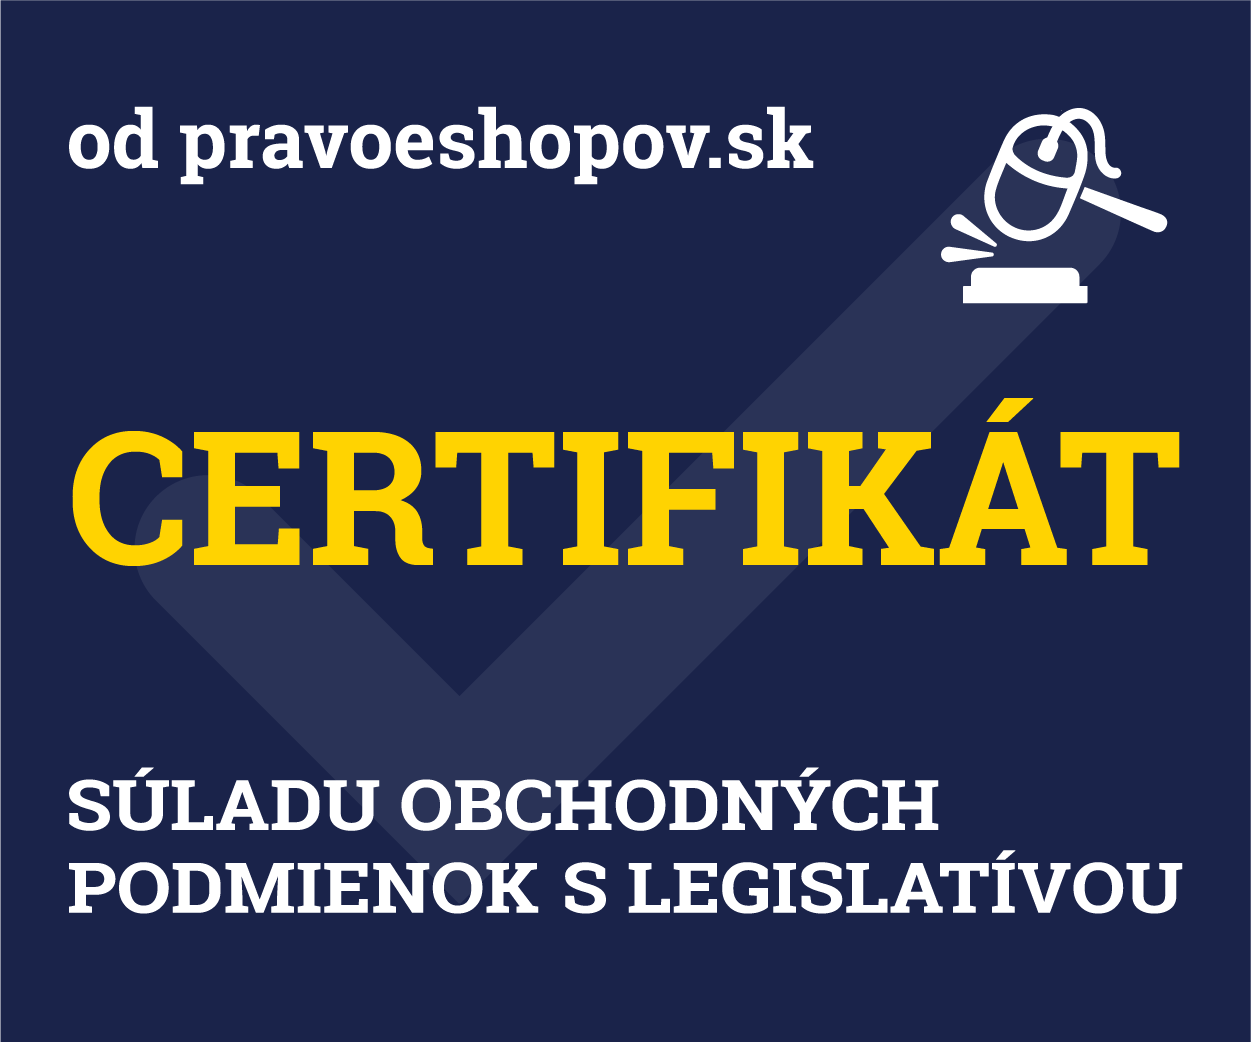 Certifikát od pravoeshopov.sk